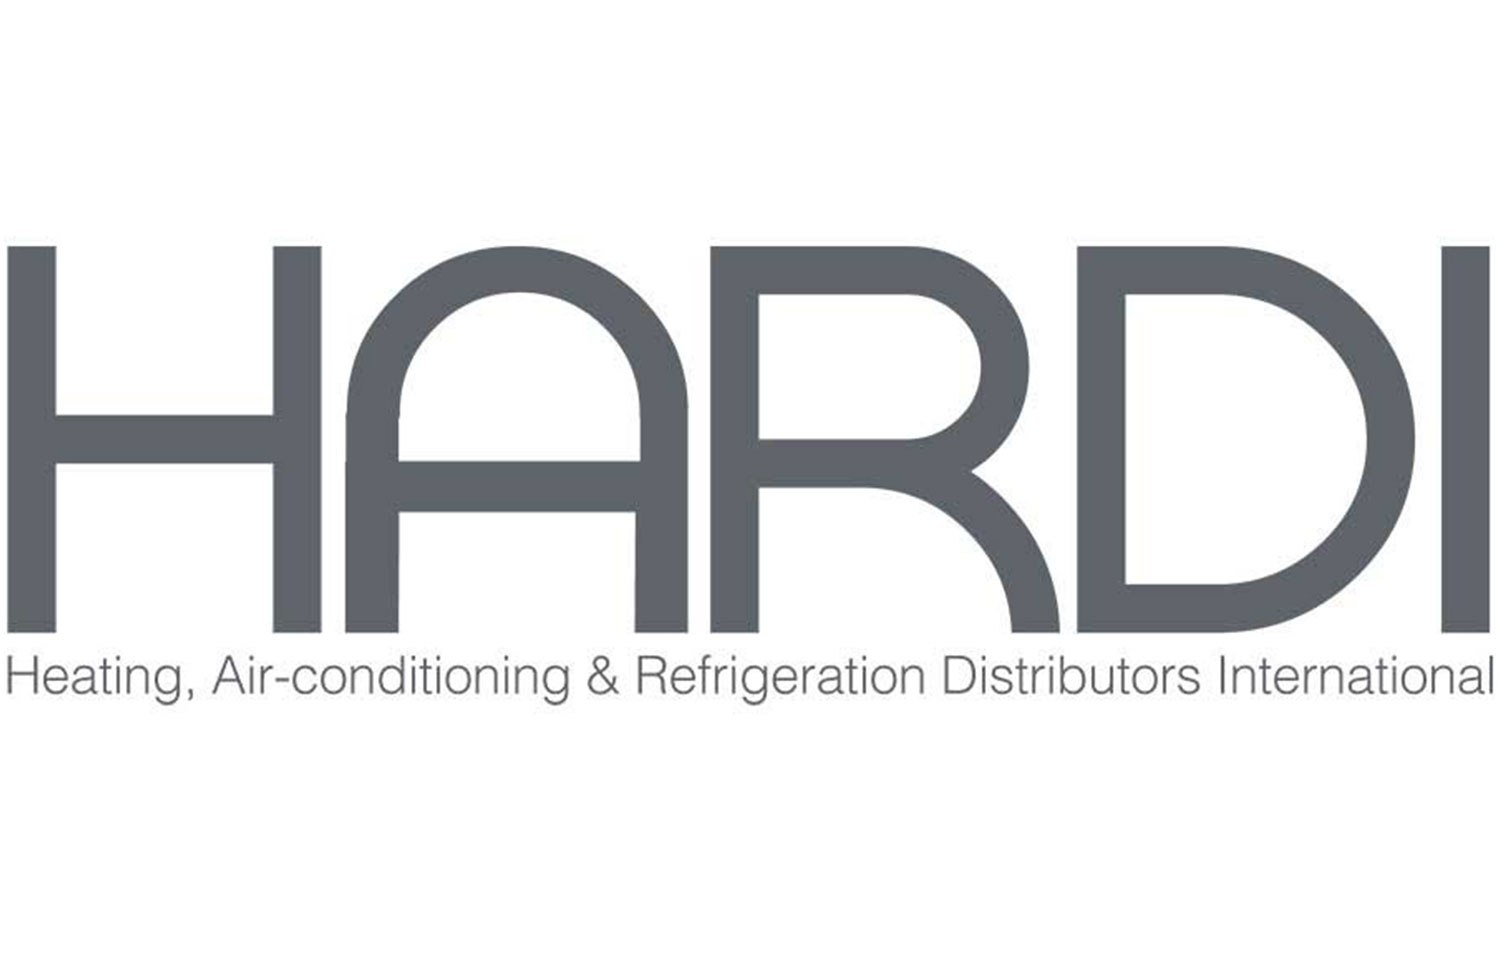 HARDI | Heating Air-Conditioning & Refrigeration Distributors International